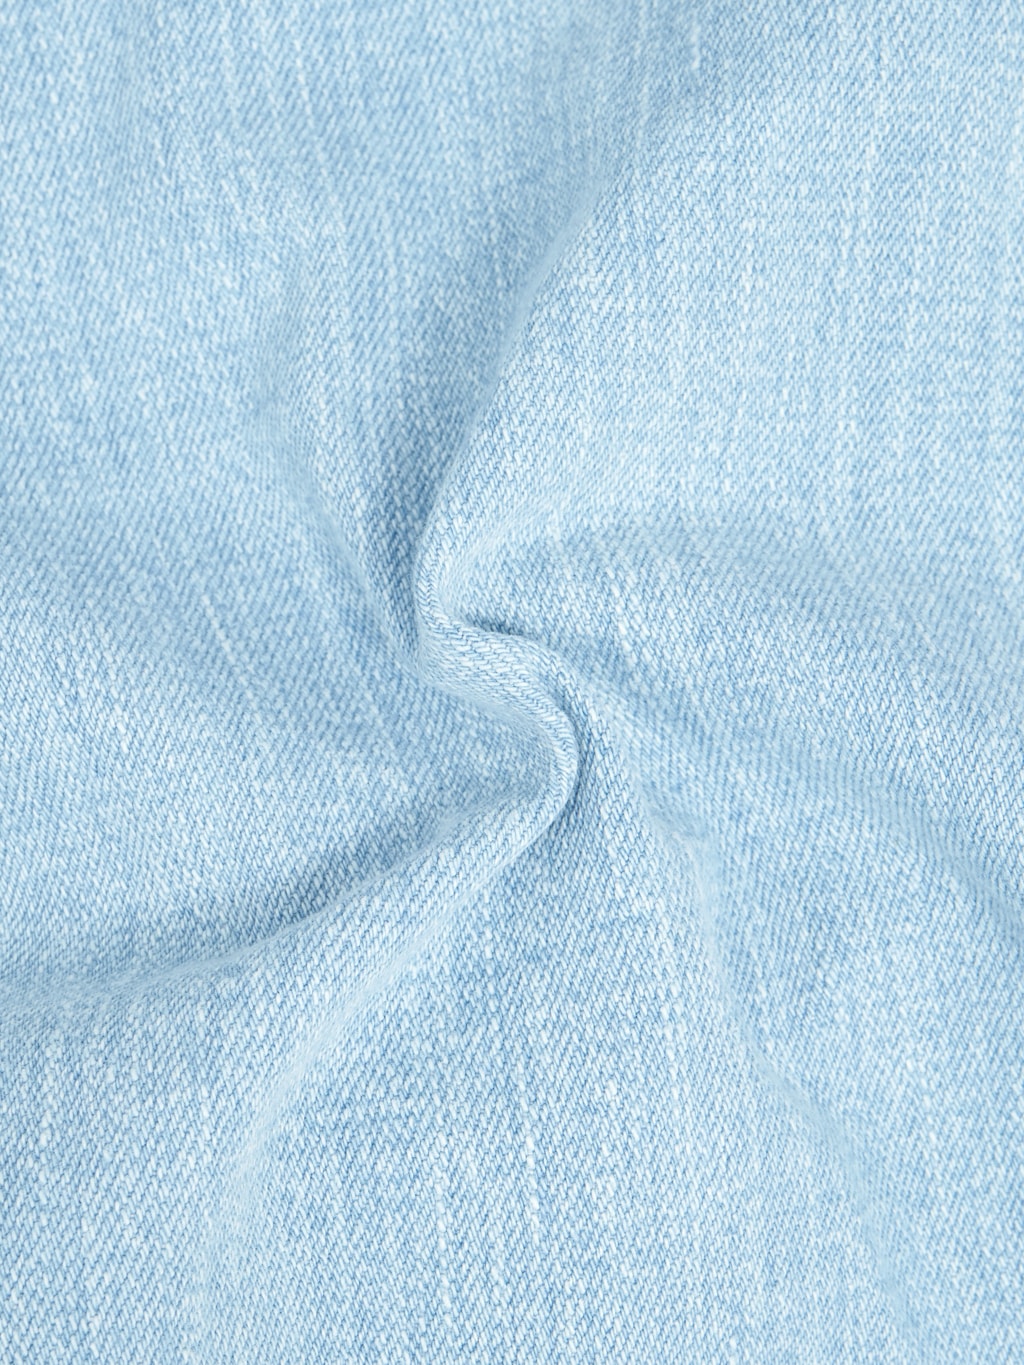 redcast heritage x oni denim kerama blue 15oz selvedge jeans texture